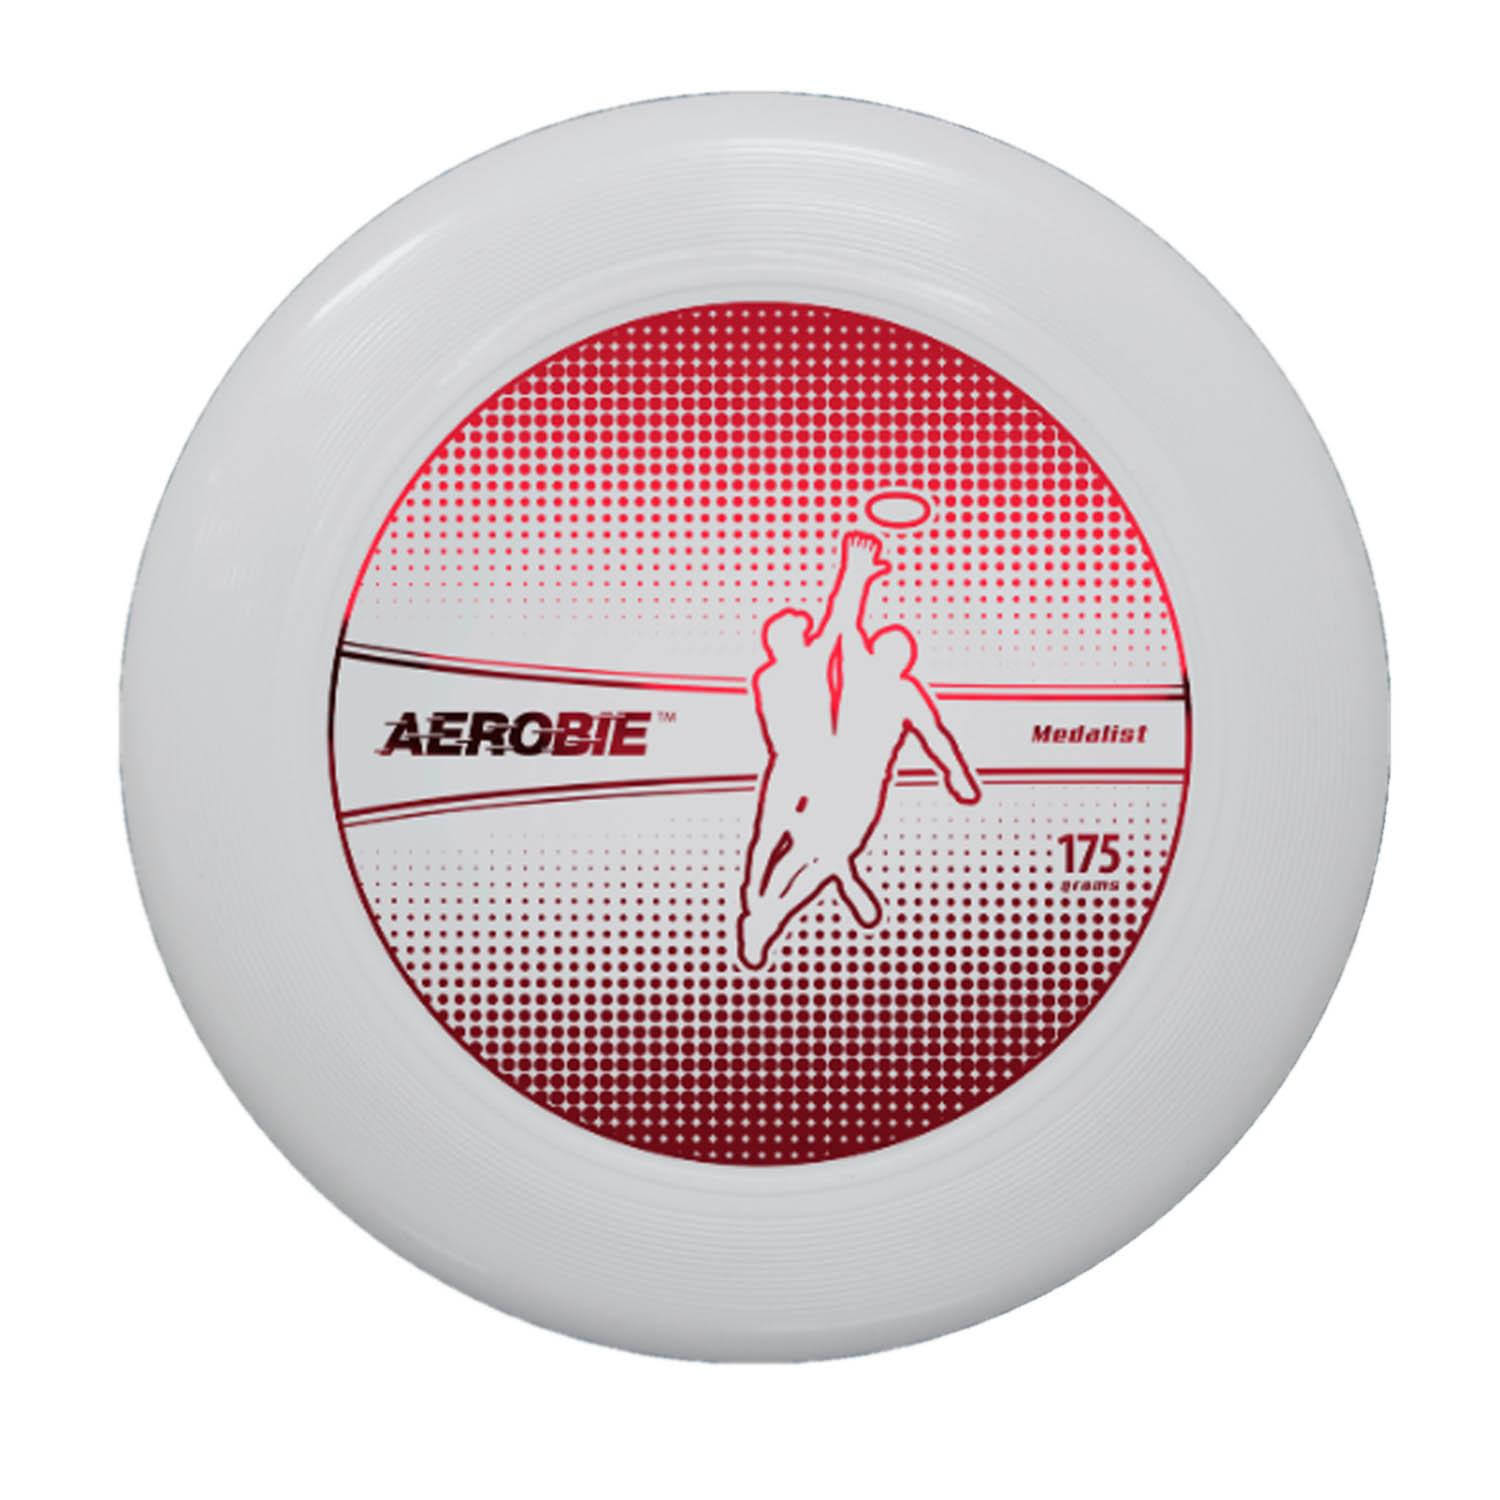 Aerobie Medalist Frisbee 175g